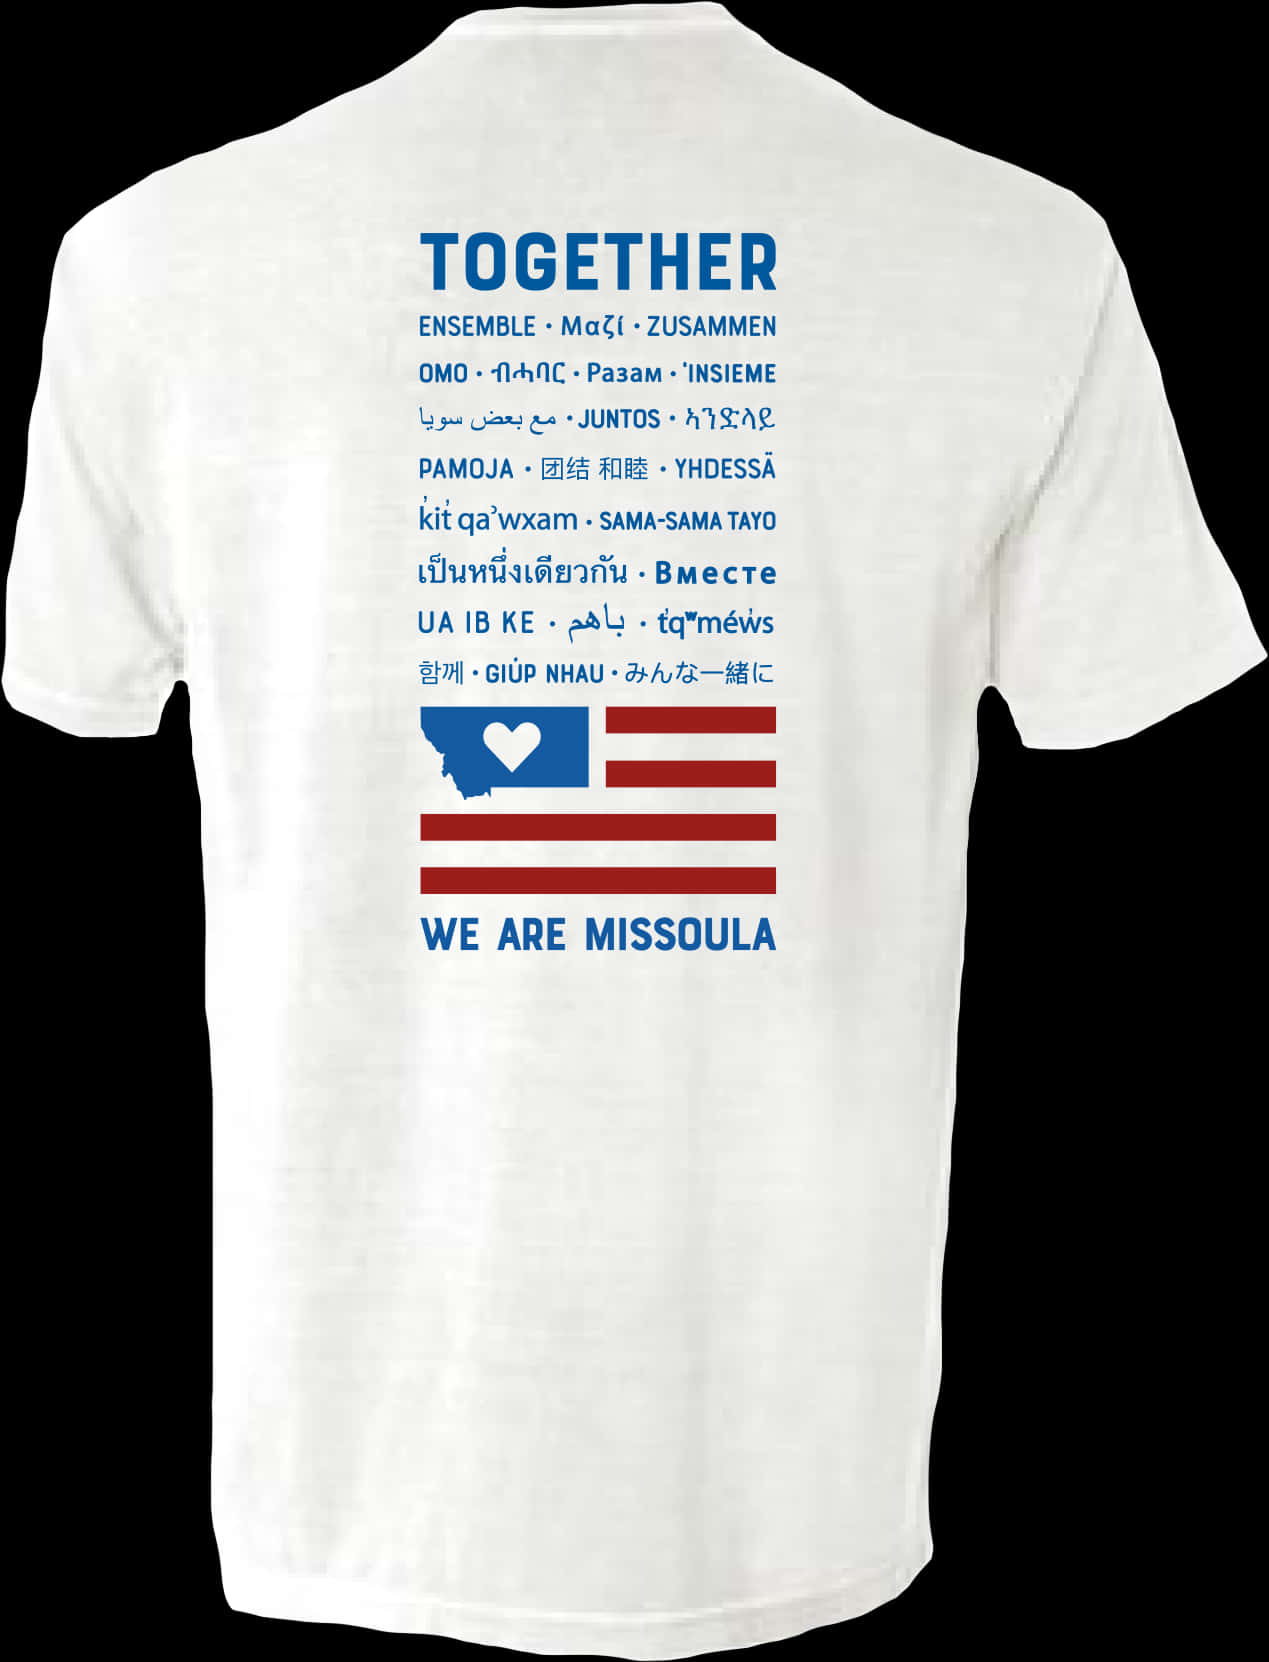 Together Multilingual White Shirt PNG image